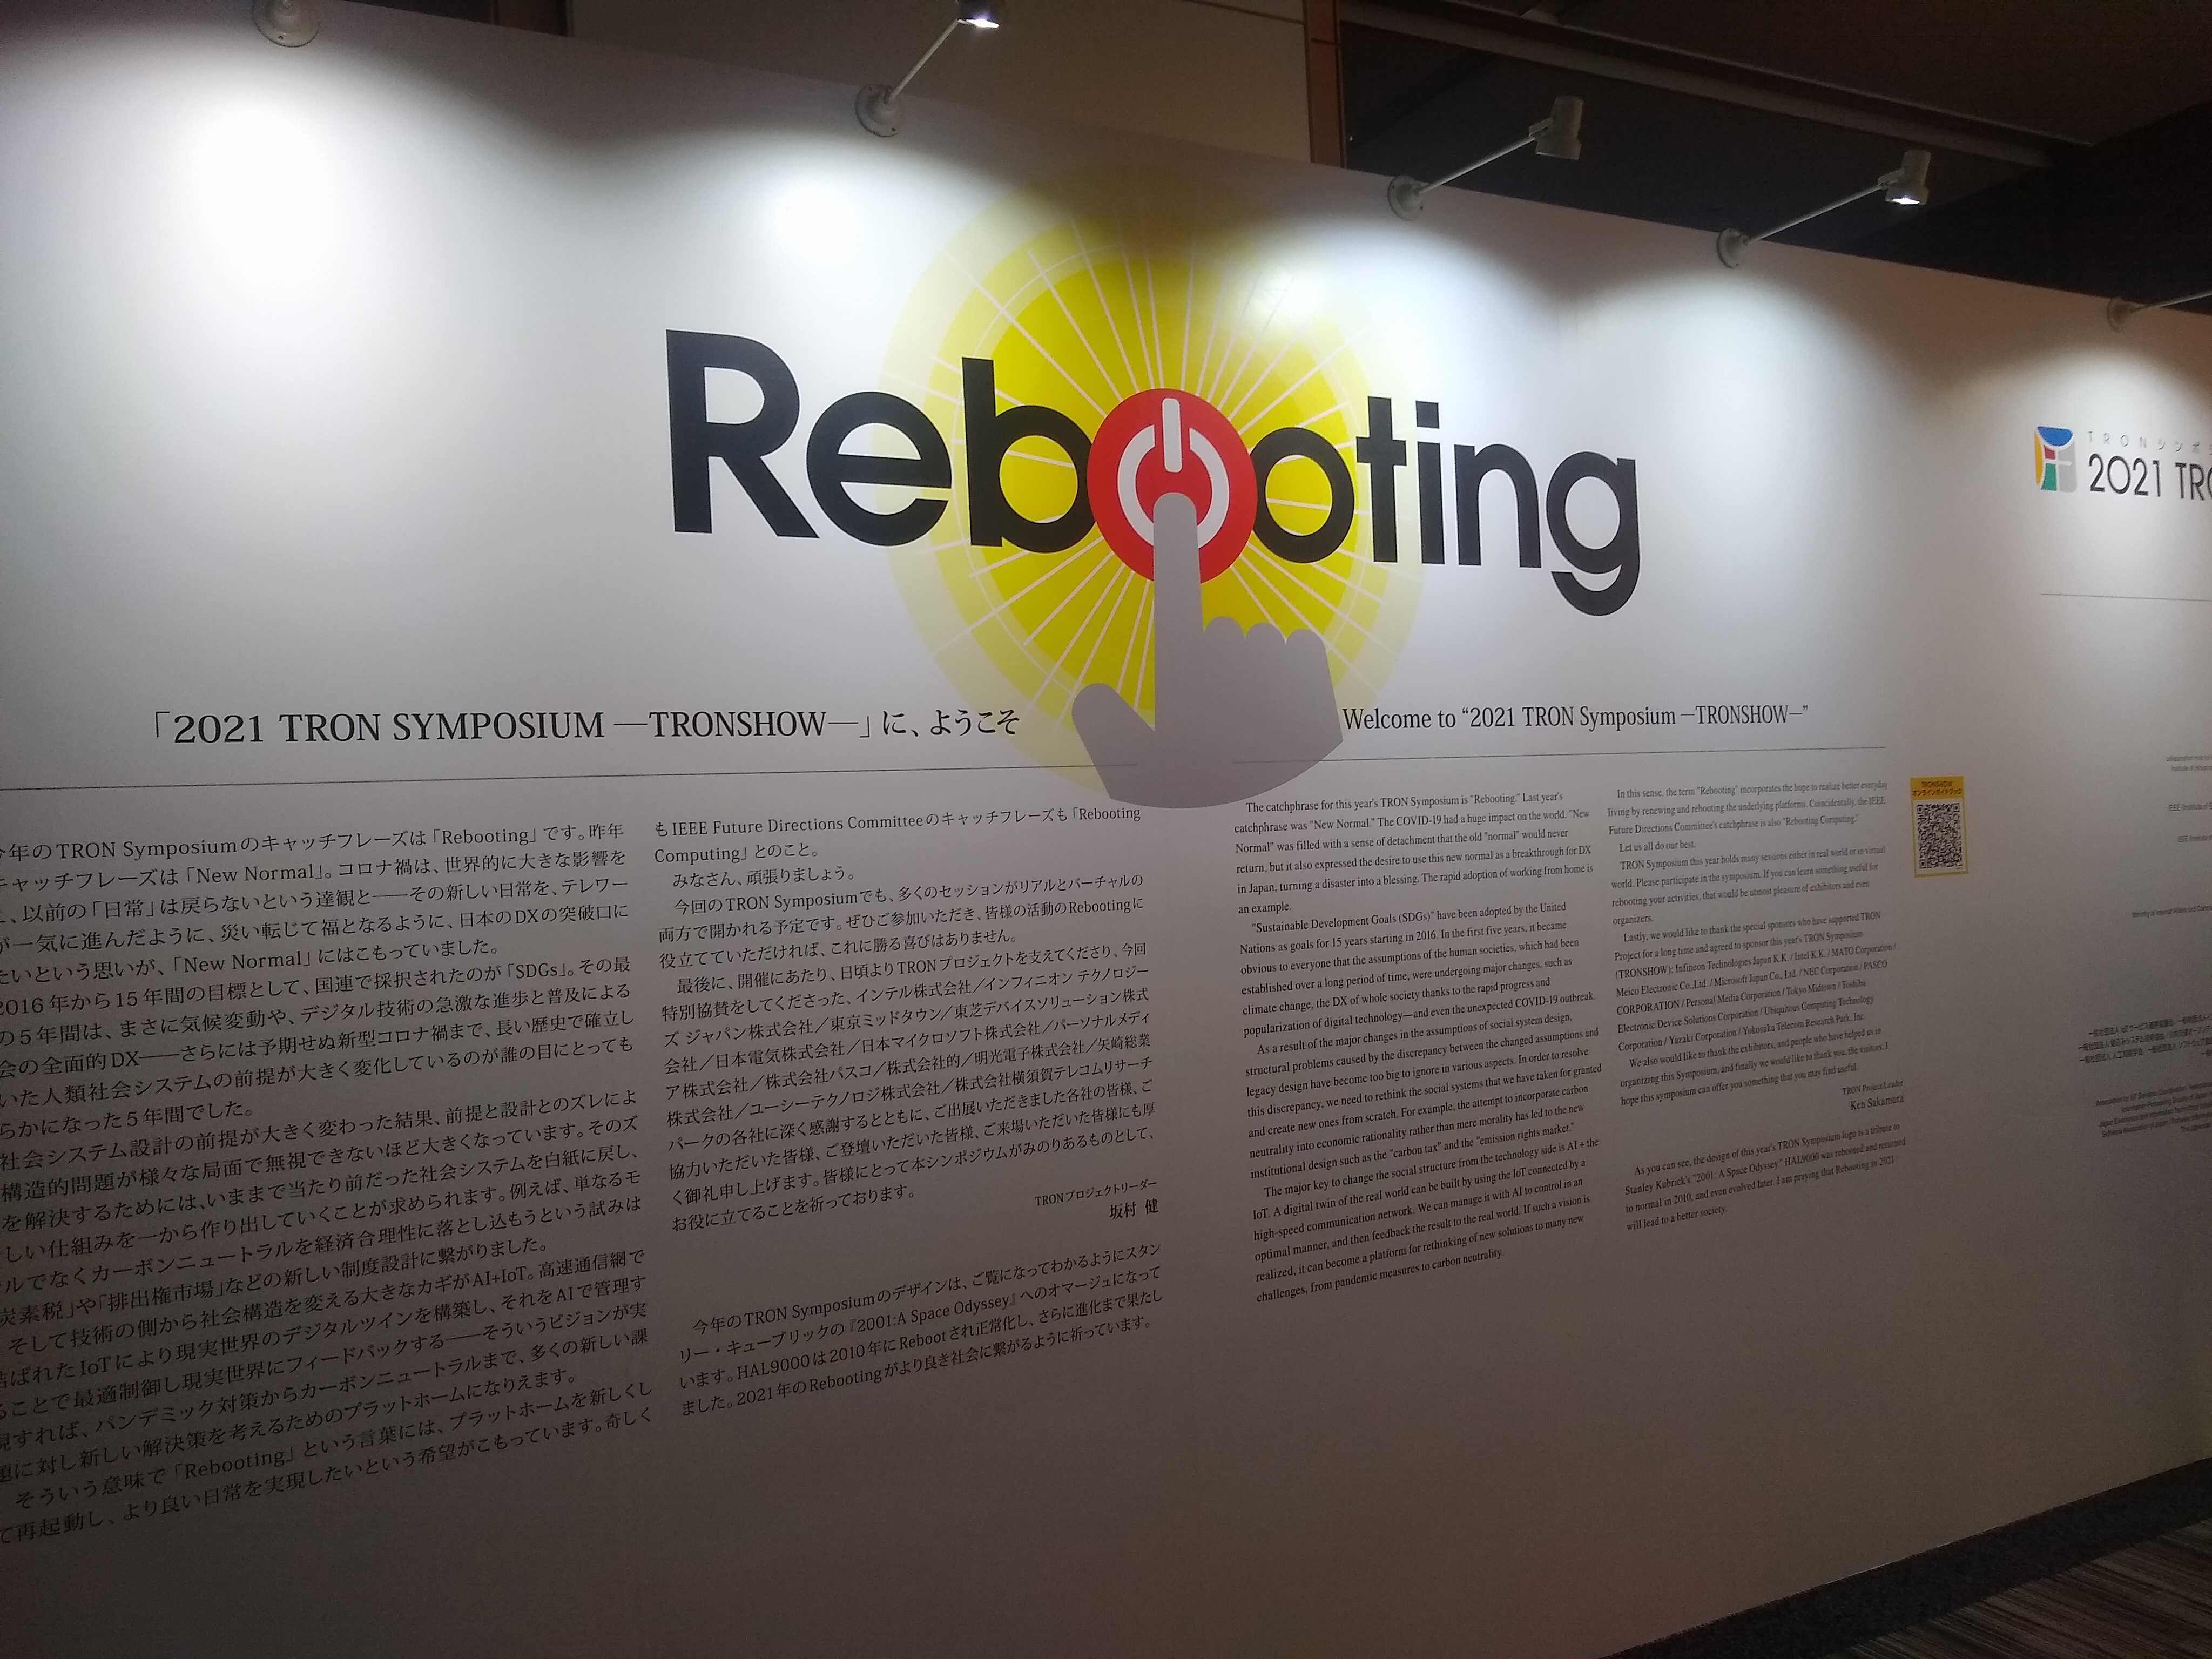 2021 TRON Symposium(TRONSHOW)のテーマは「Rebooting」